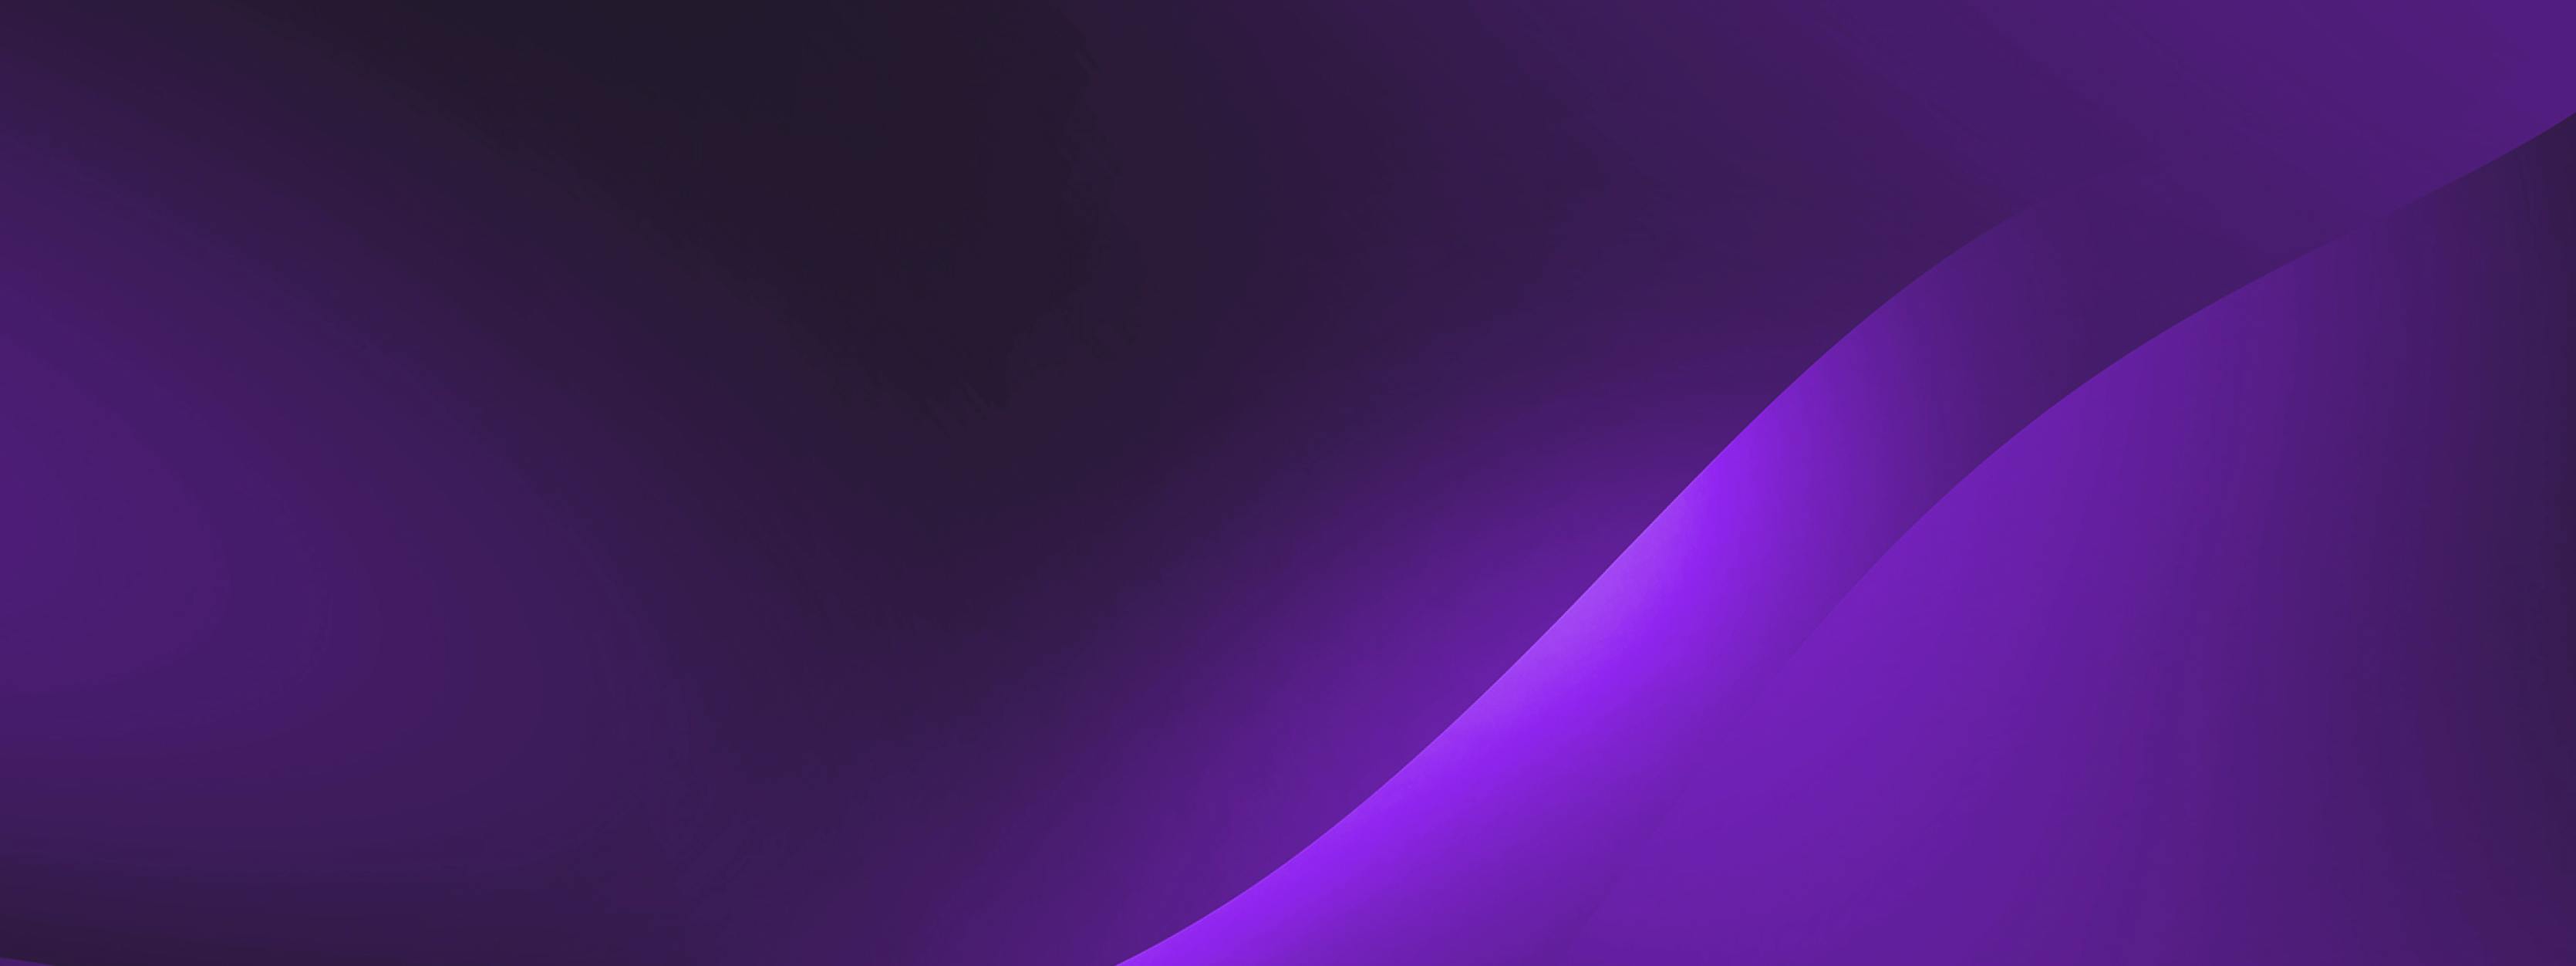 Ll Dark purple background mobile